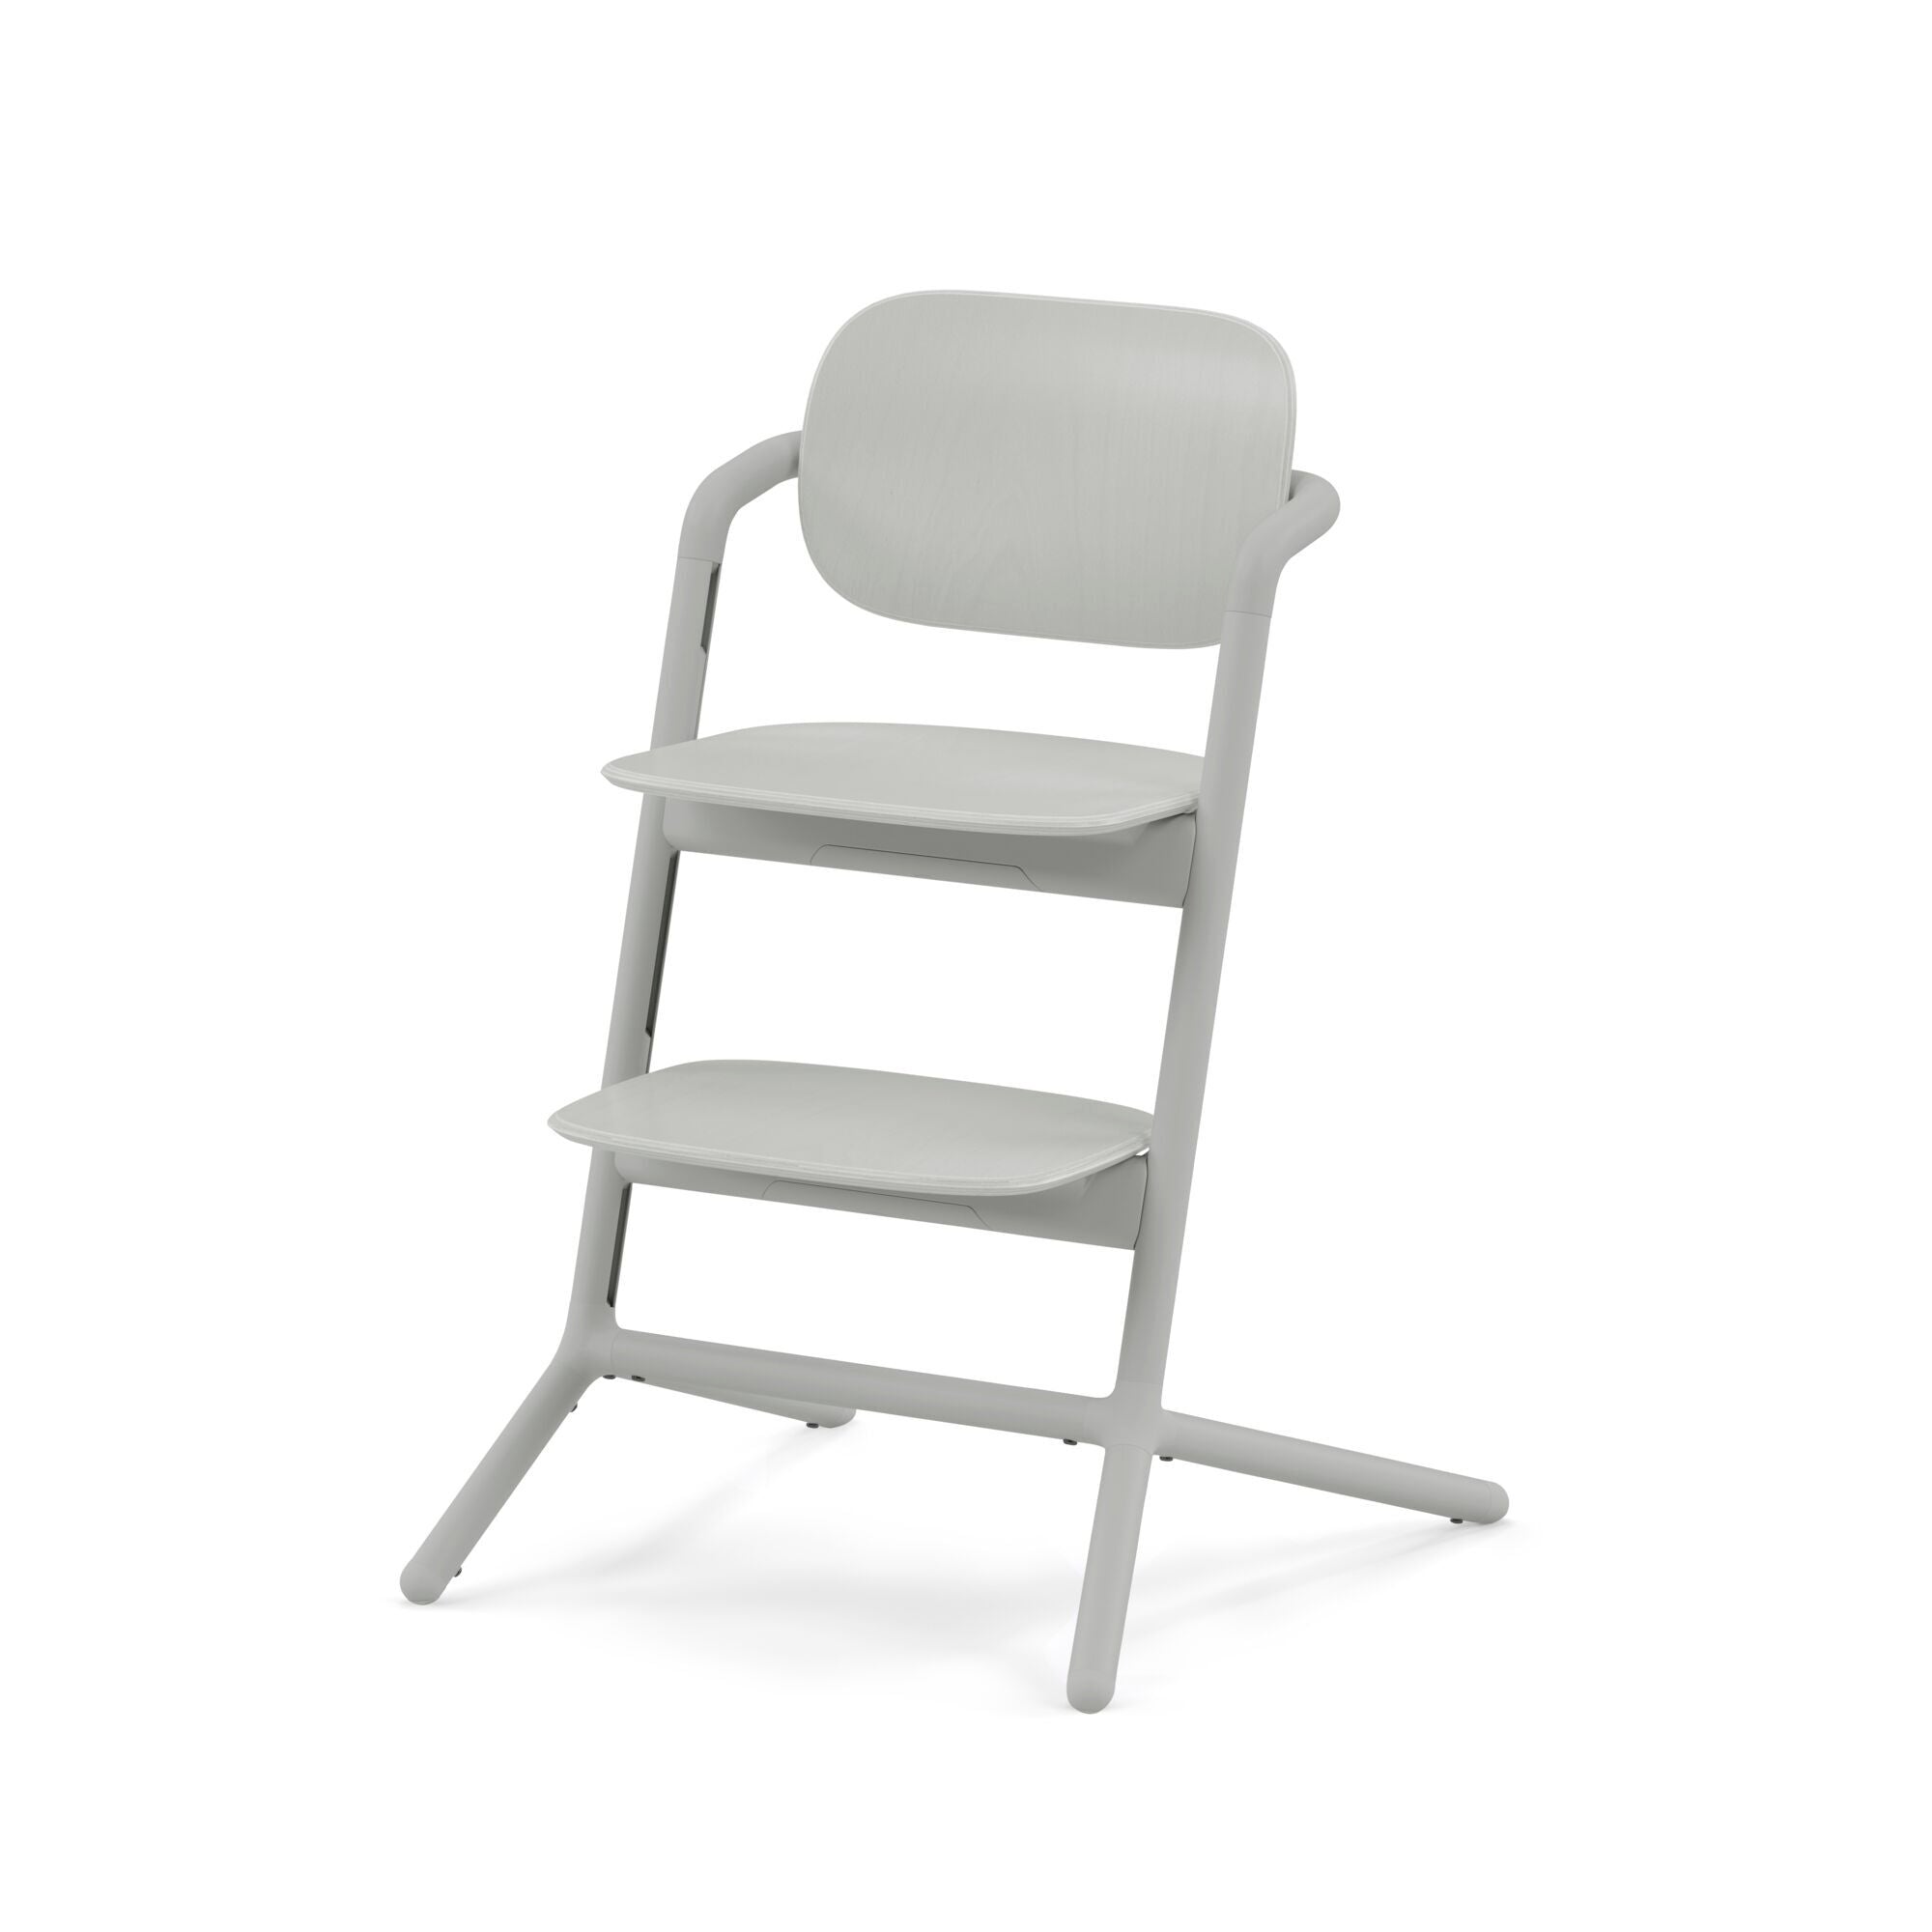 Cybex Lemo 2 High Chair 3-in-1 - ANB Baby -4063846197637$100 - $300